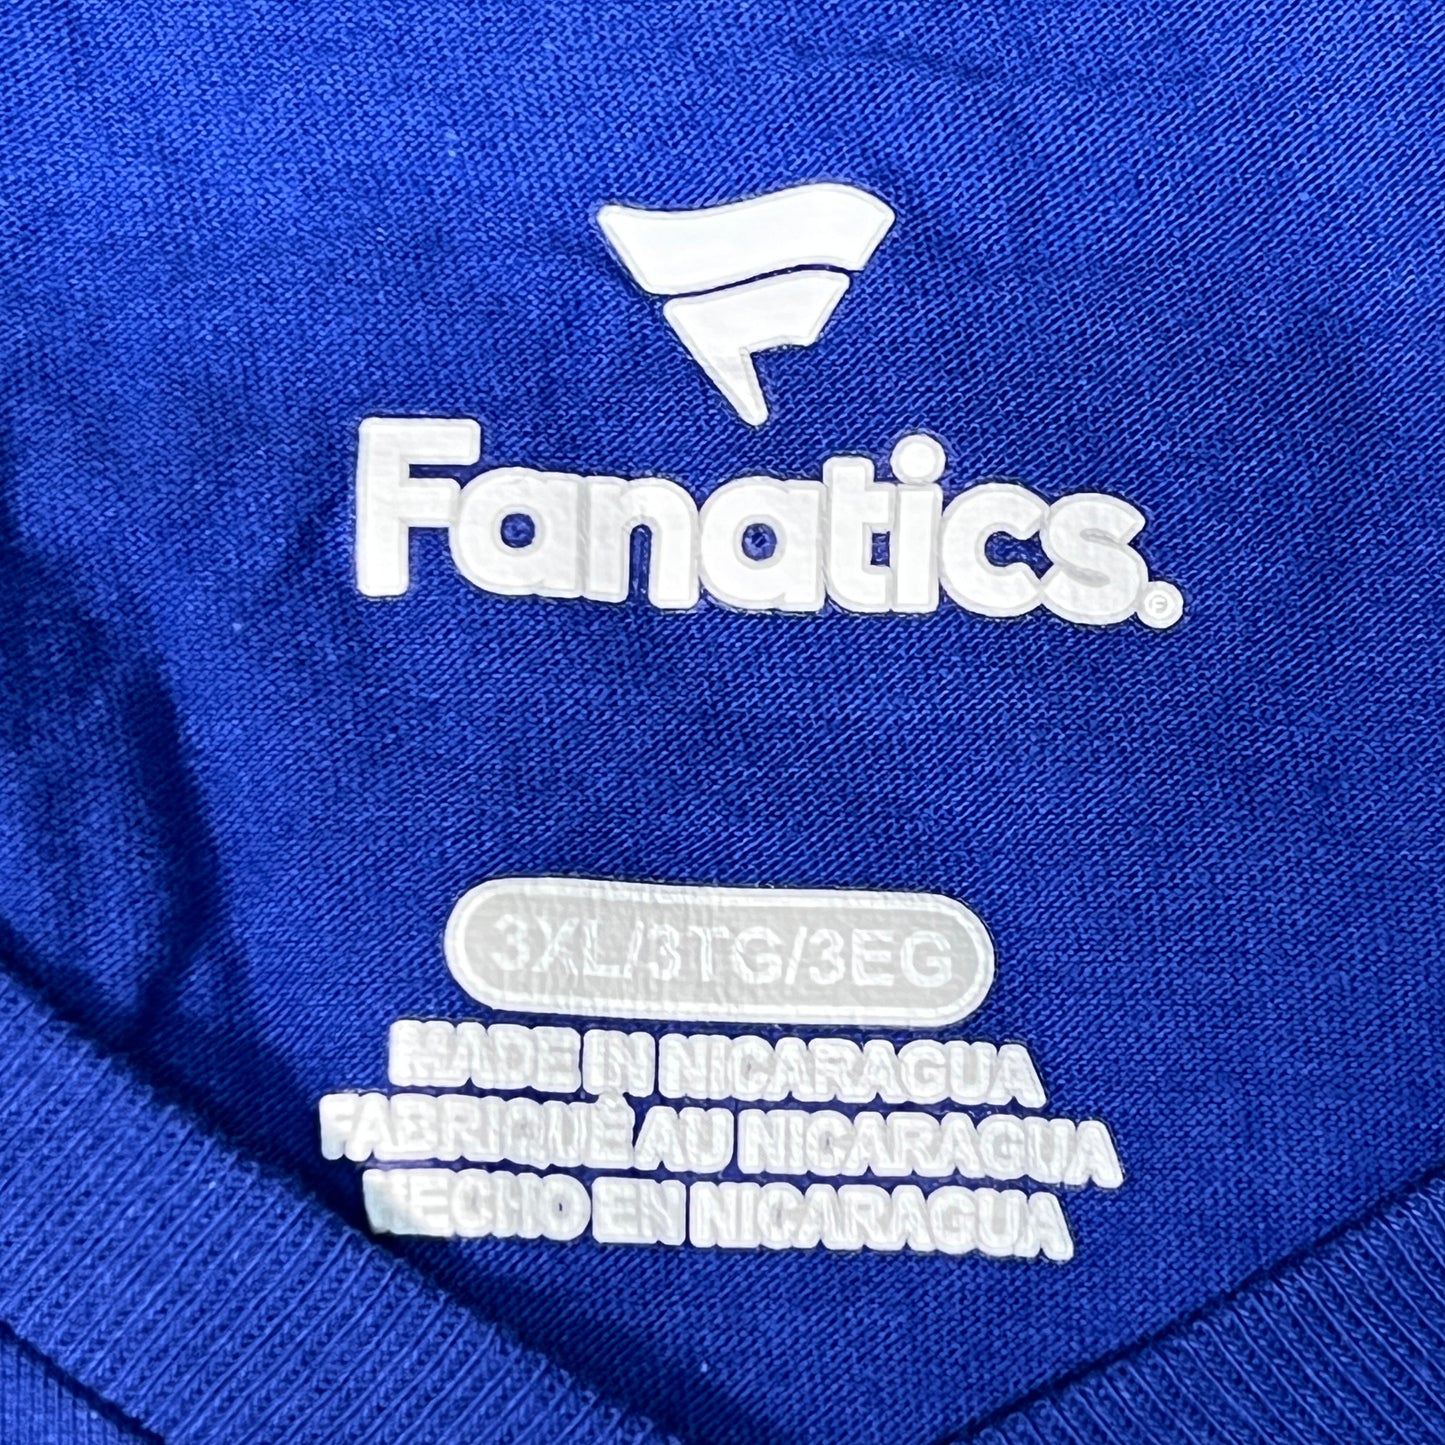 FANATICS Los Angeles Dodgers Baseball V-neck T-shirt Women's Sz 3XL Blue MLBT3970 (New)